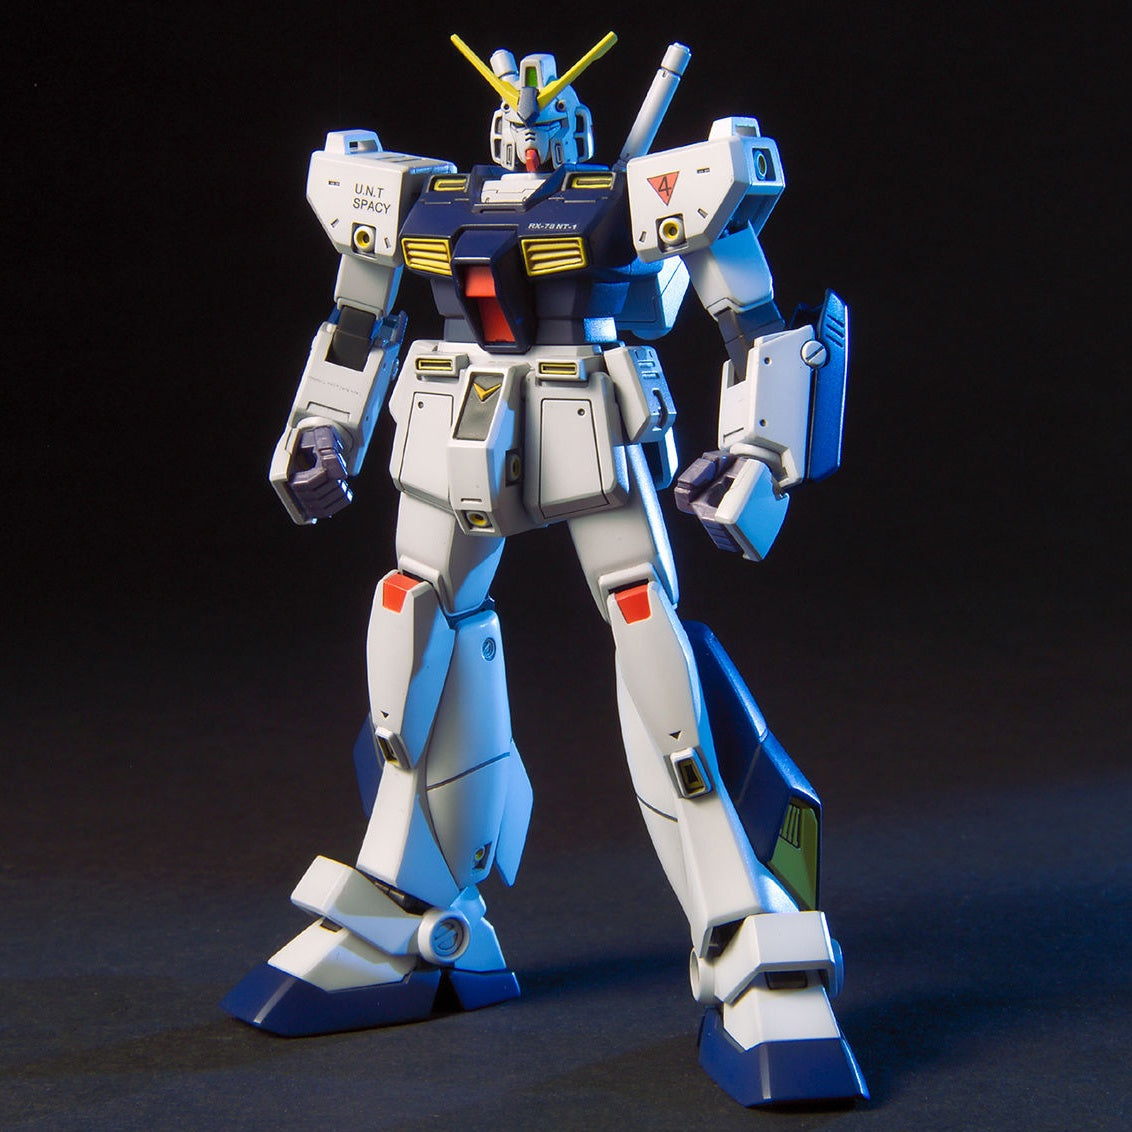 1/144 HGUC Gundam NT-1 Alex